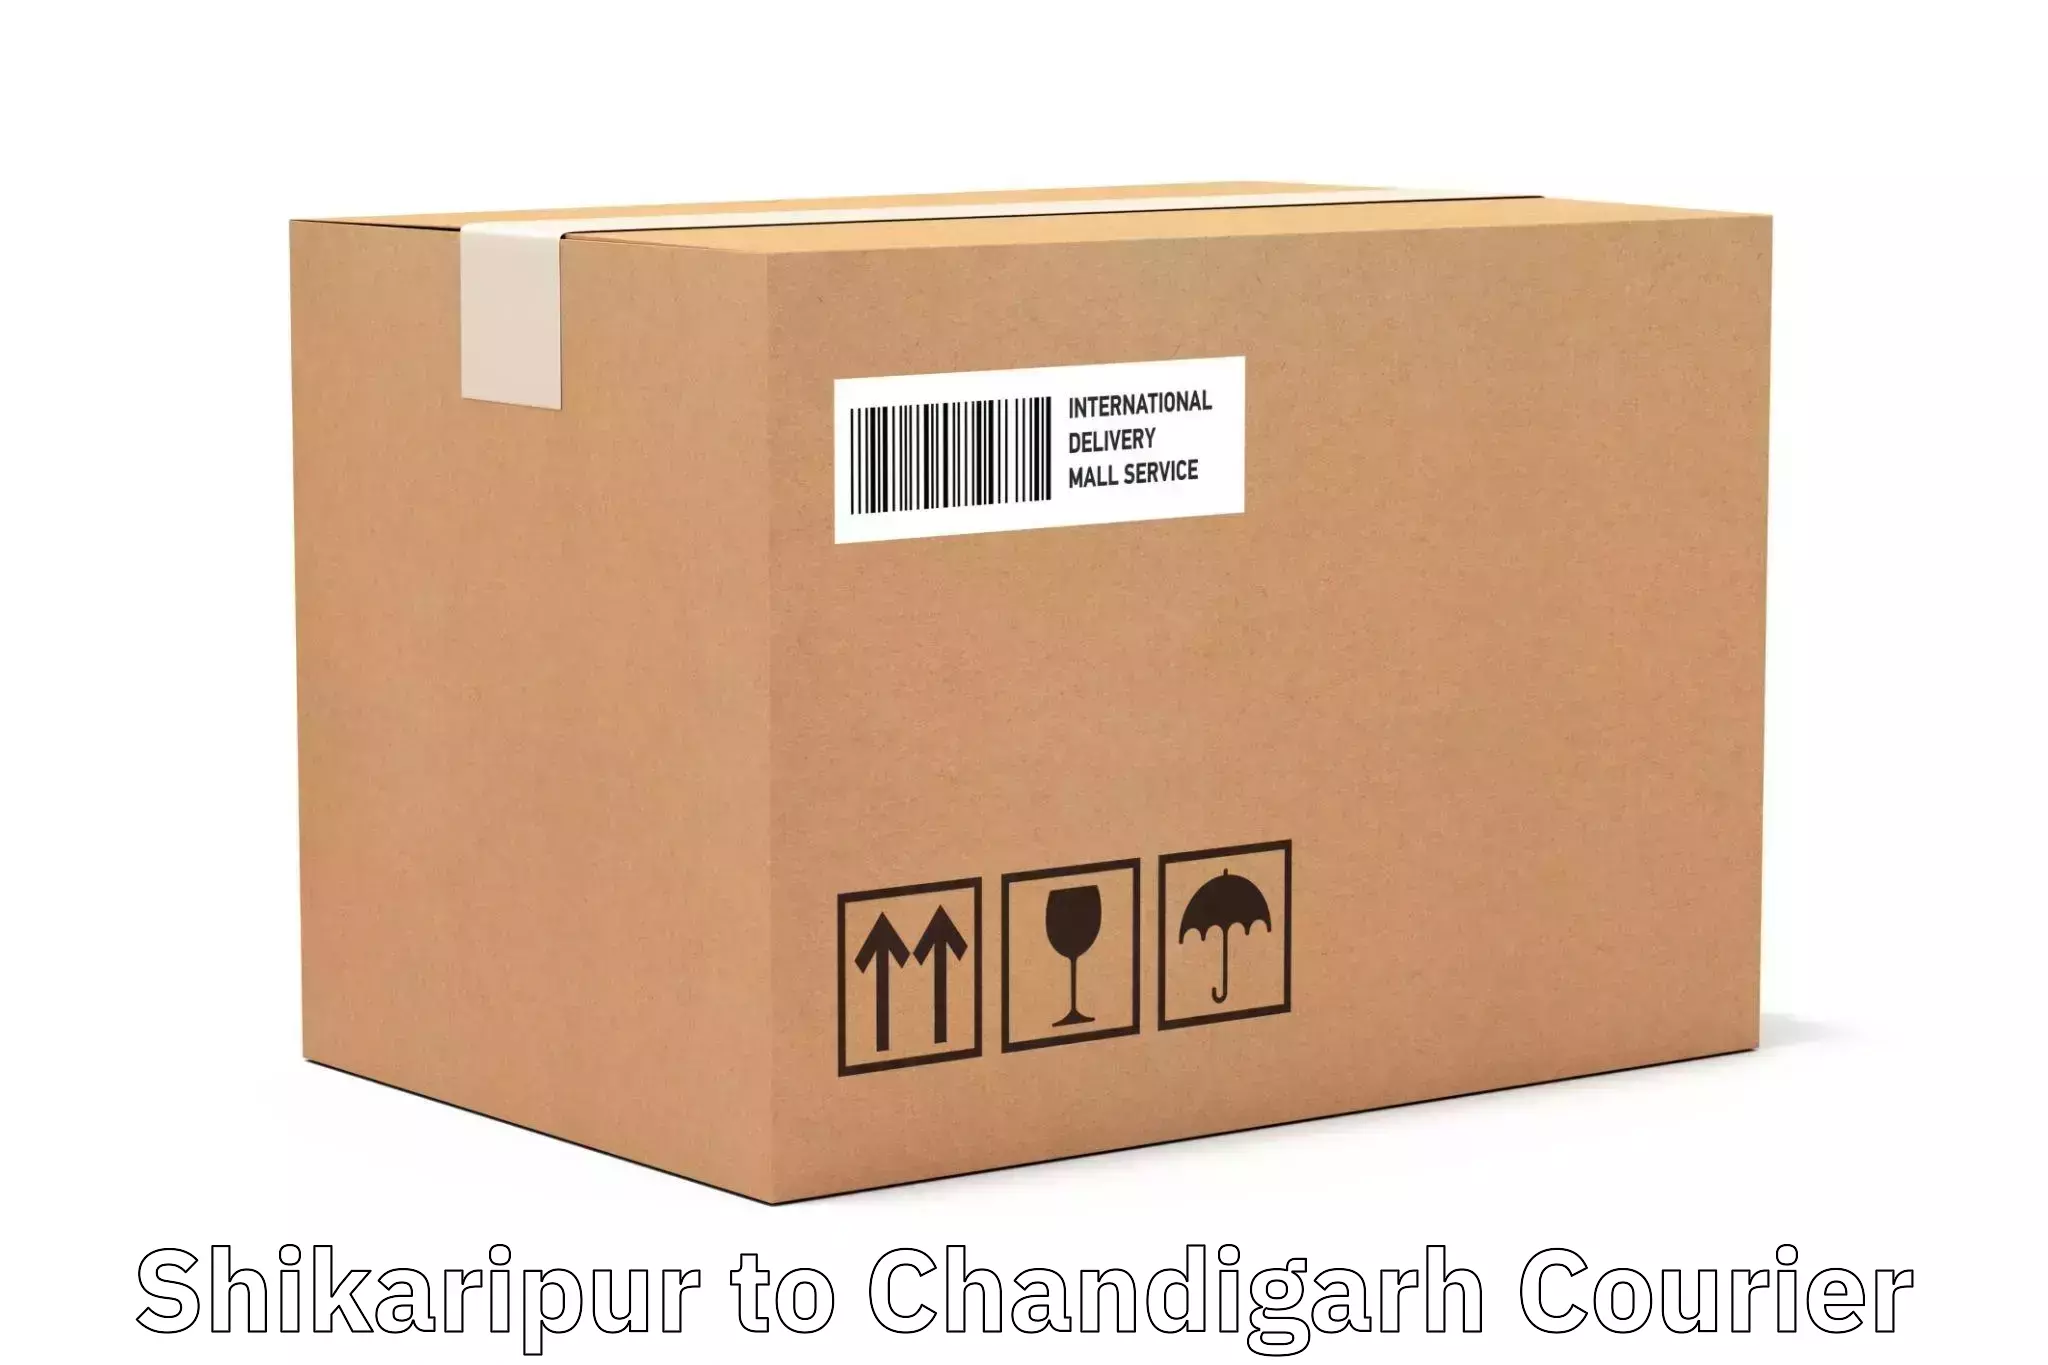 Express delivery capabilities Shikaripur to Kharar